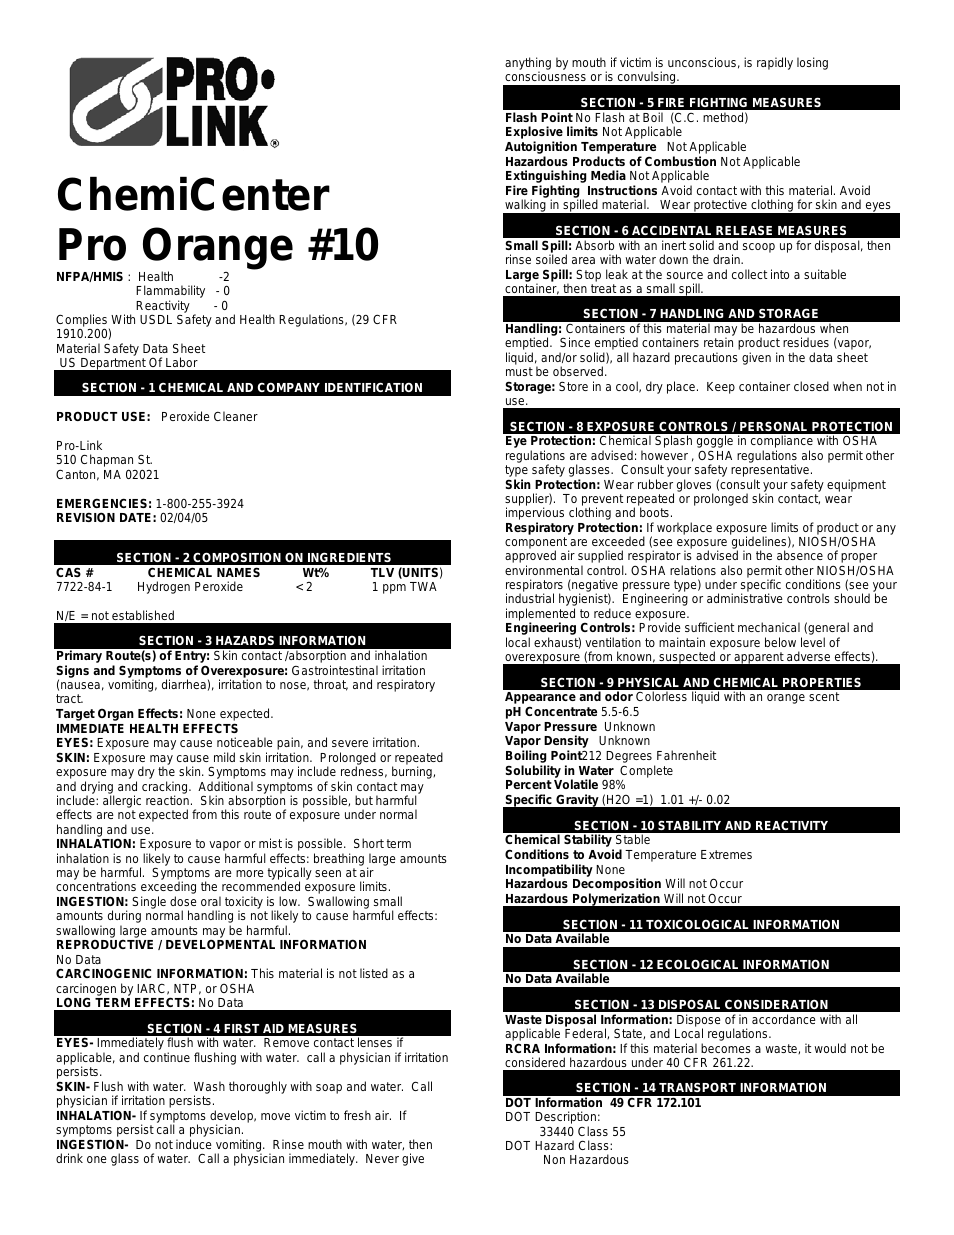 #10 ChemiCenter Pro Orange Light Duty 10695